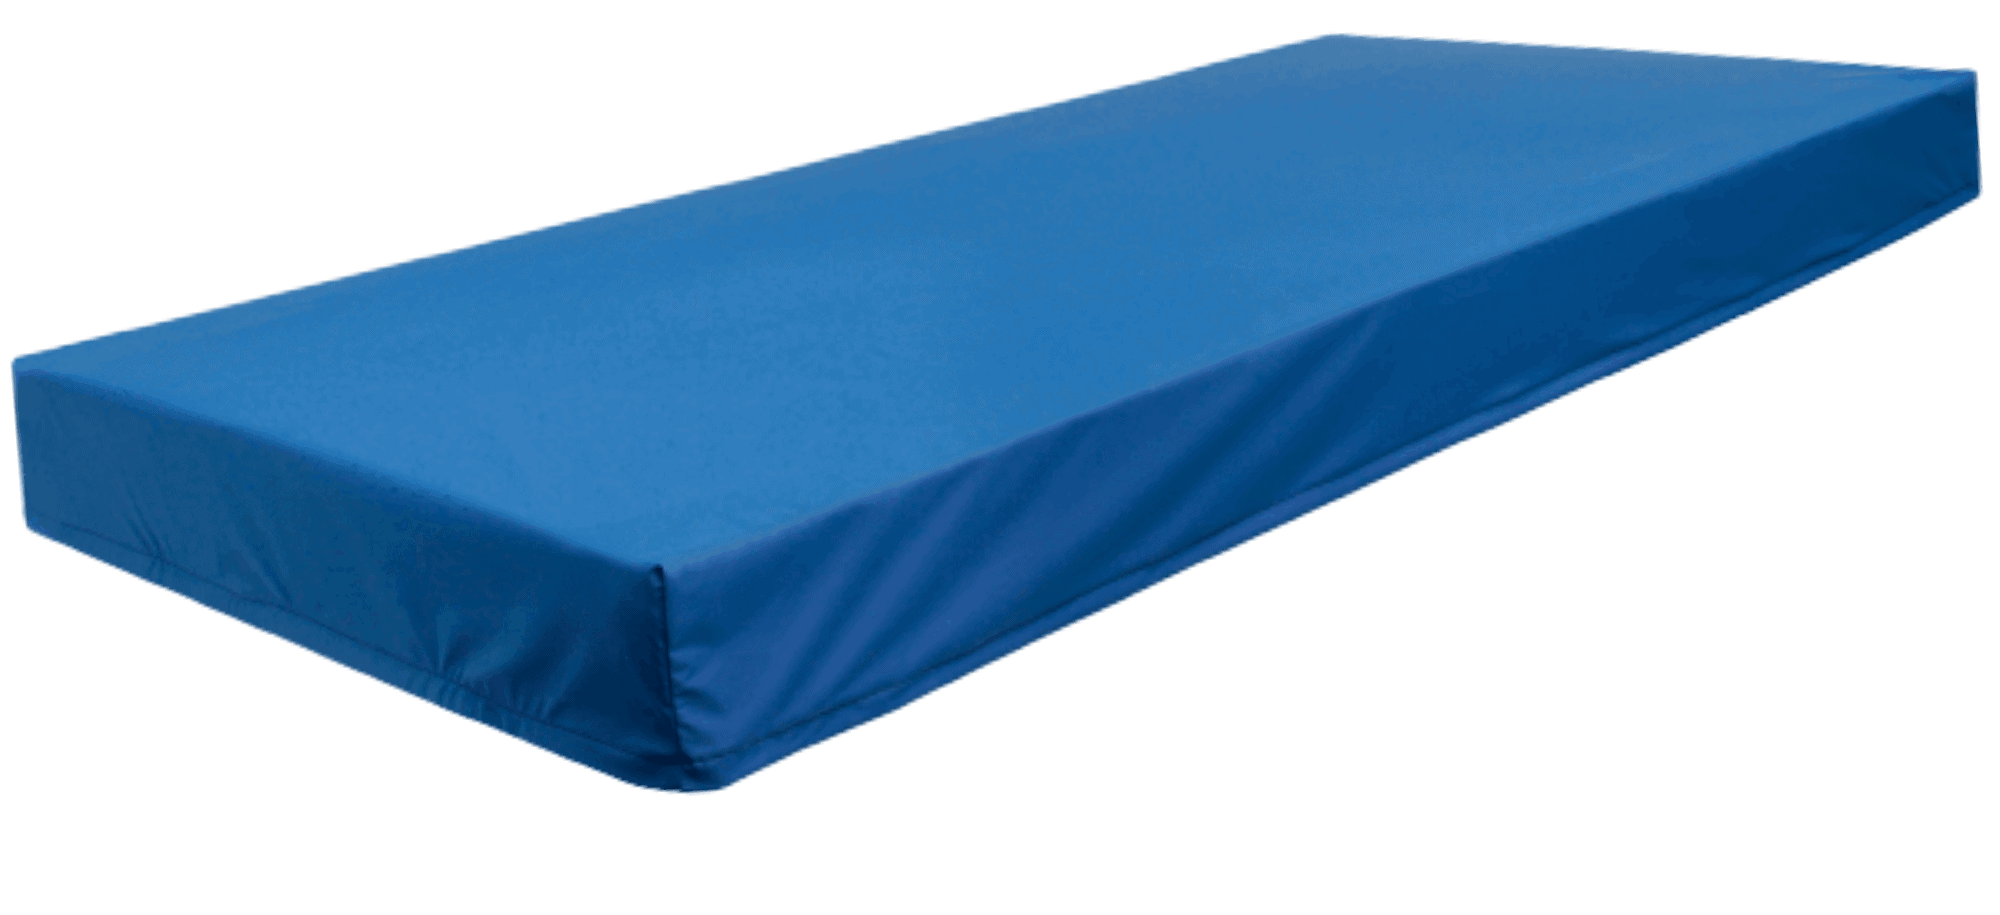 a blue mattress on a white background.